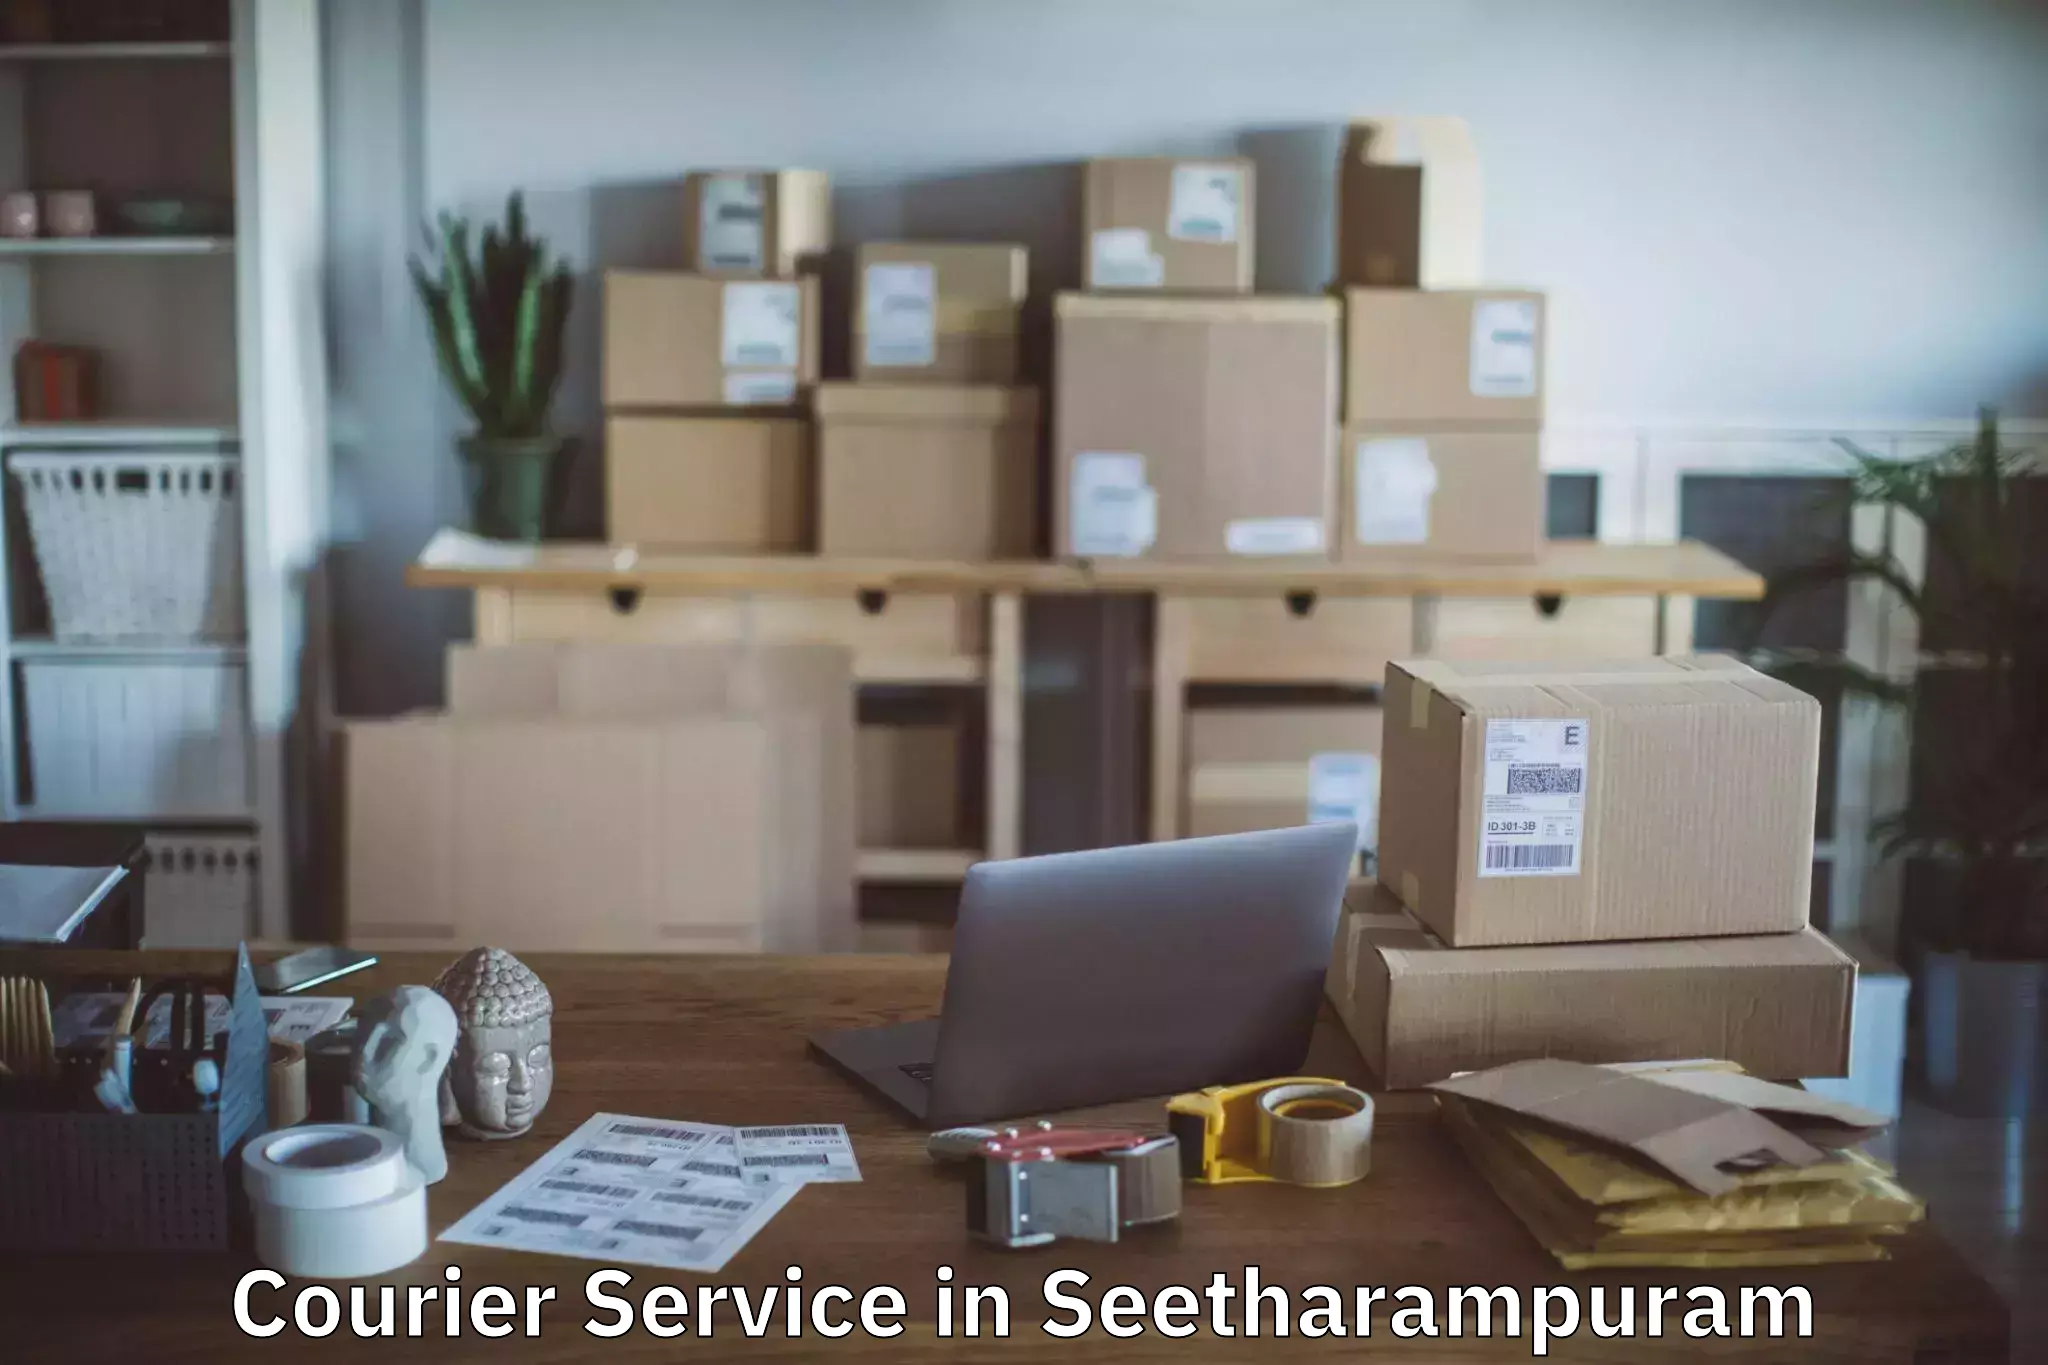 Lightweight parcel options in Seetharampuram